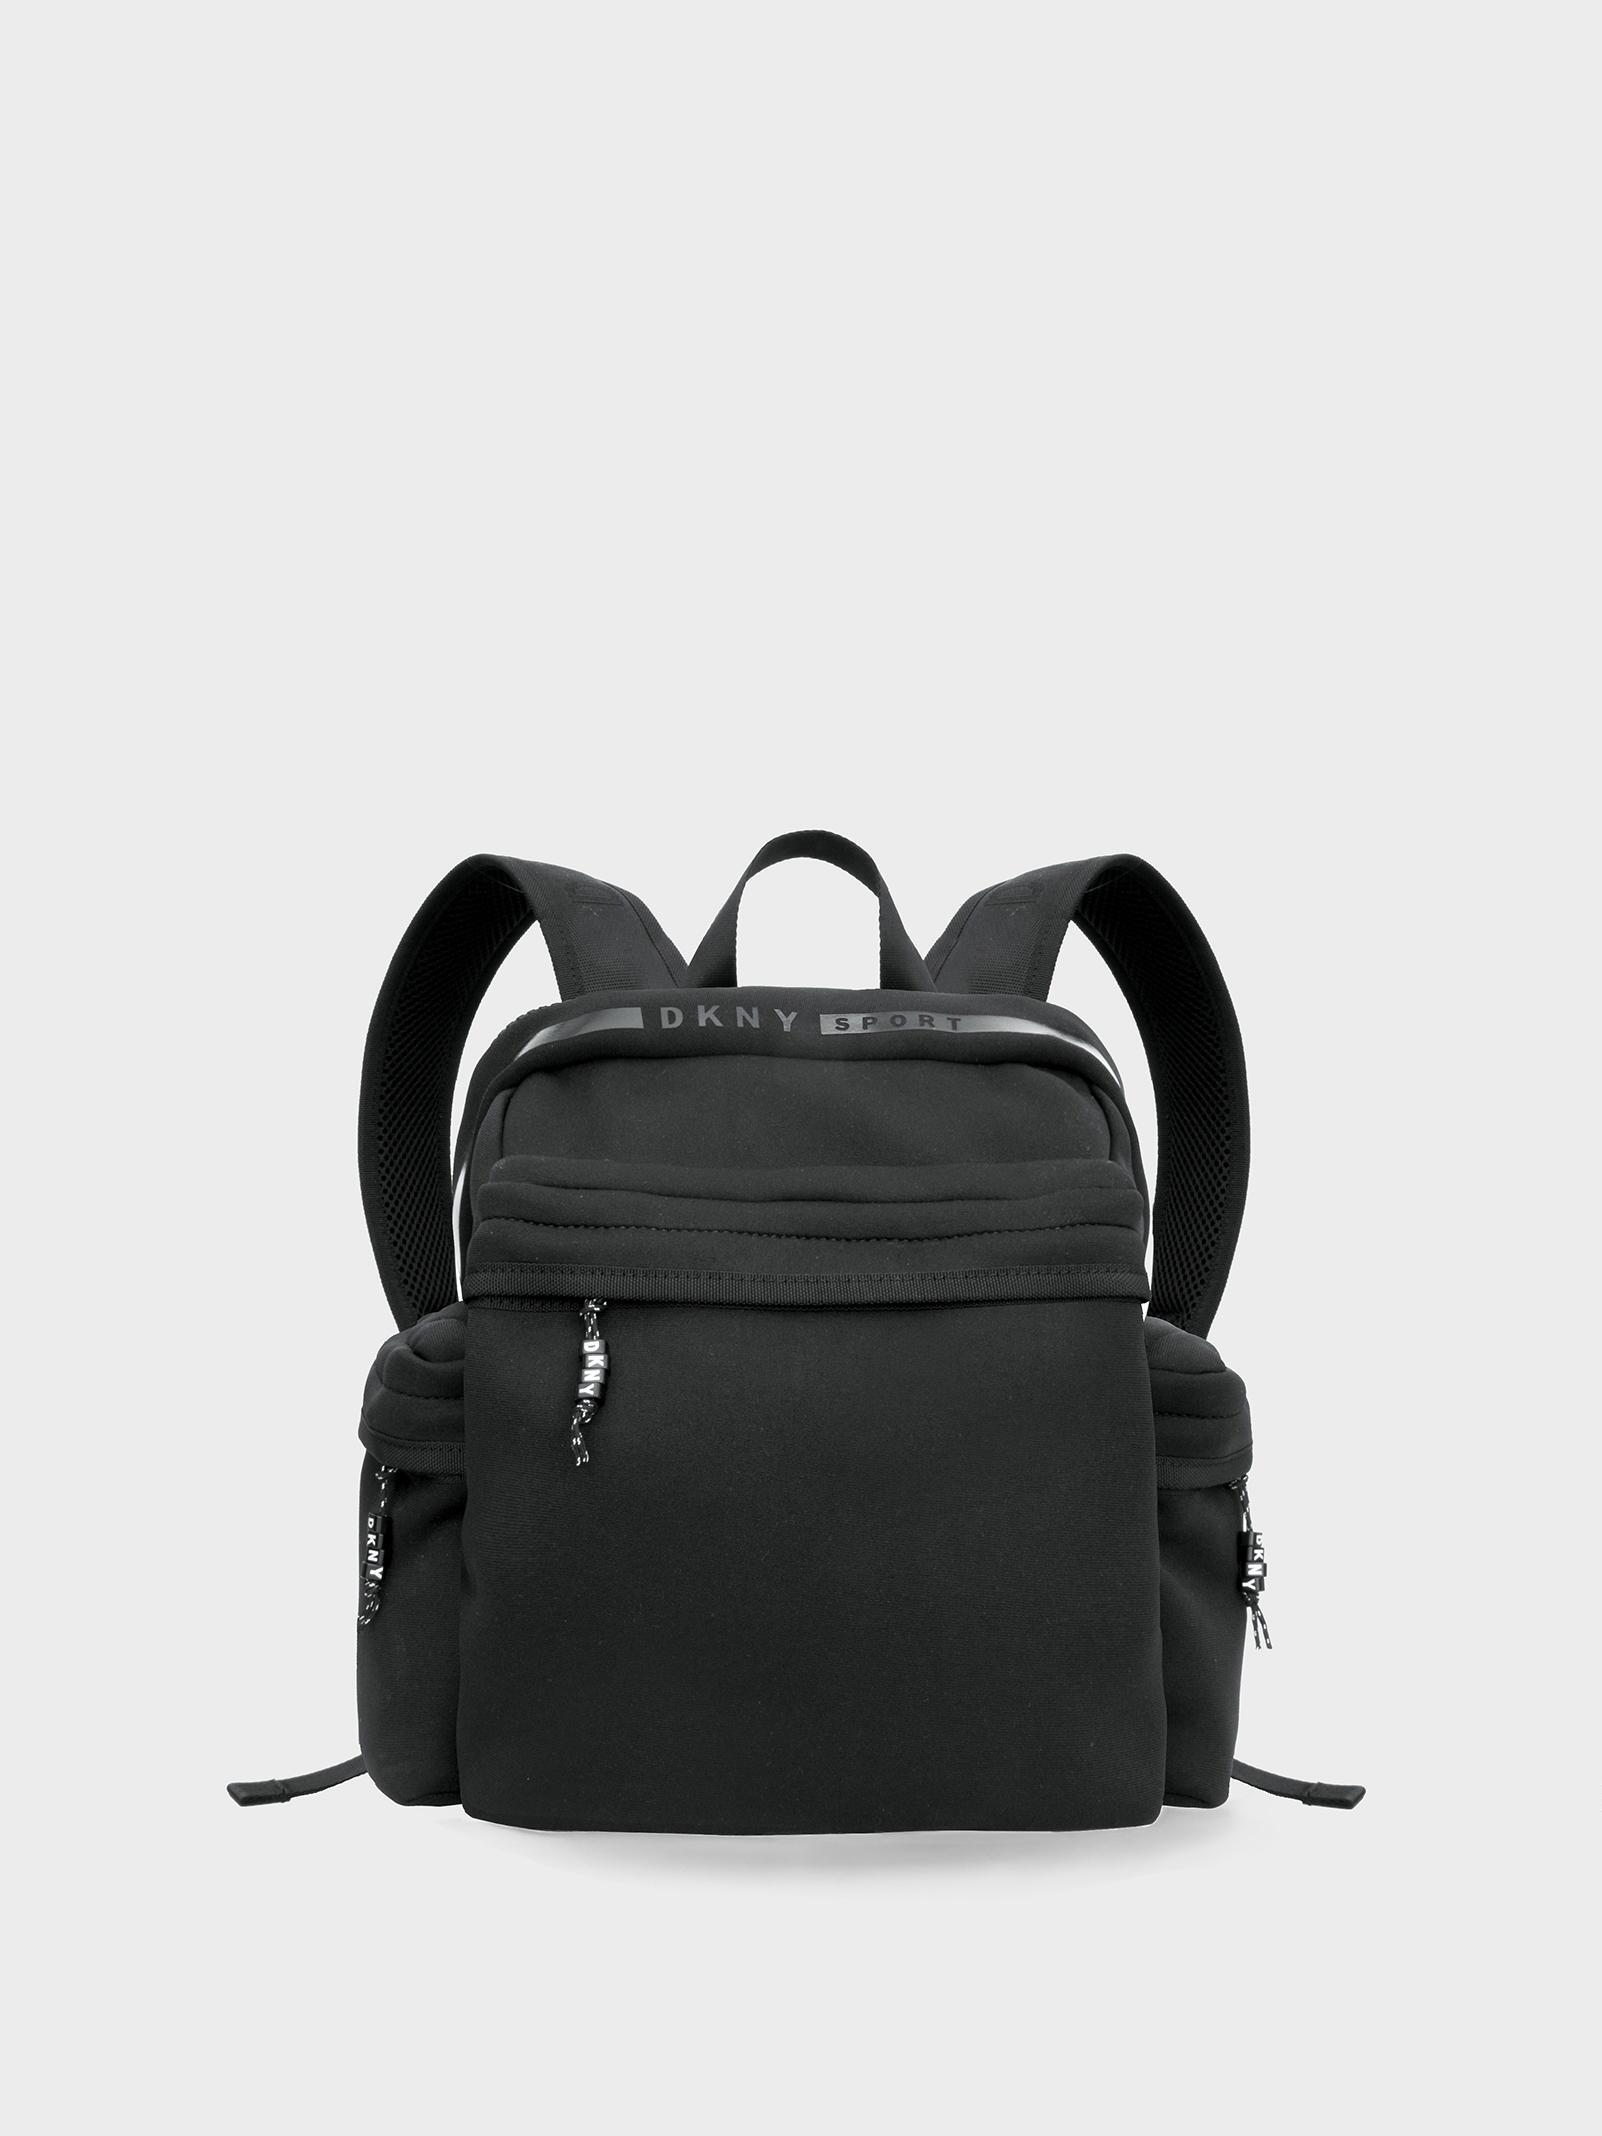 dkny sport backpack